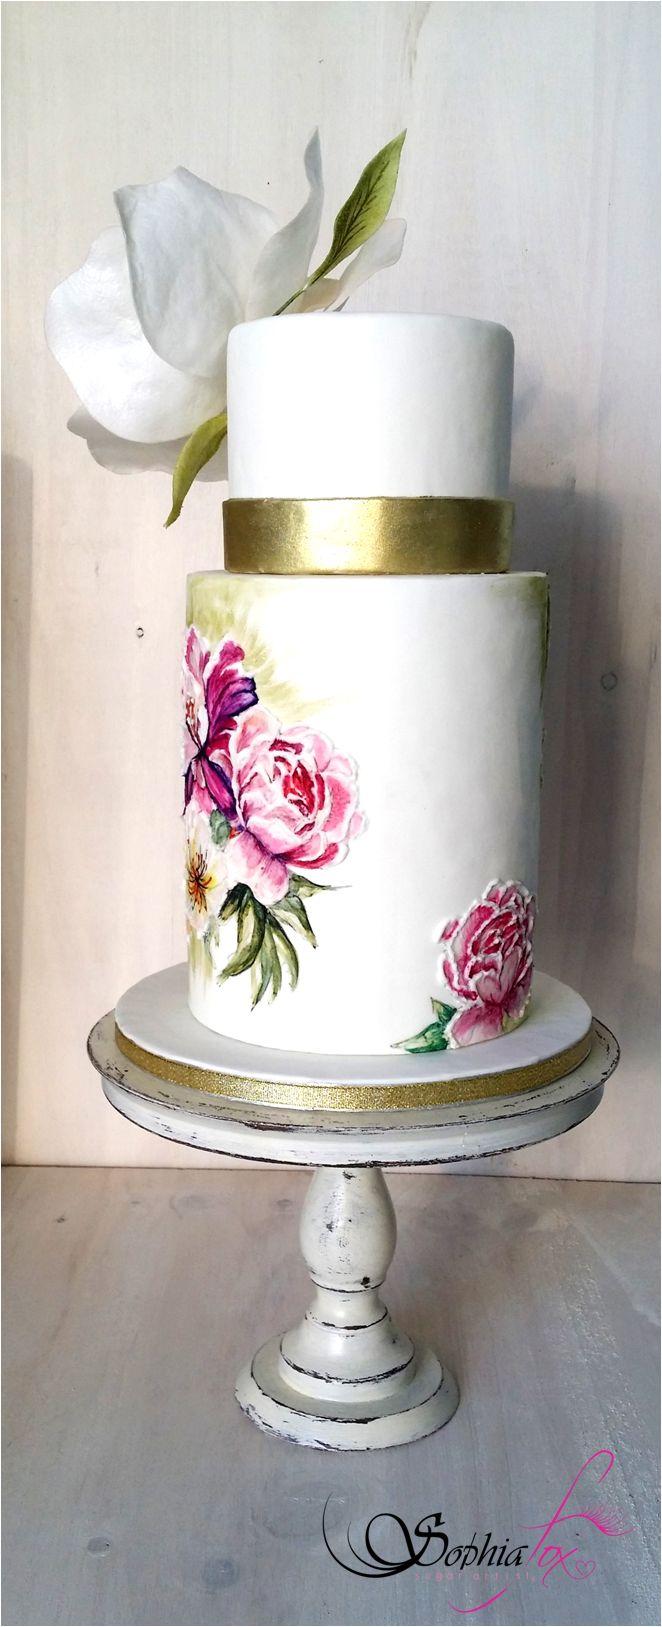 Wedding - Sophia Fox - Painted Cakes -